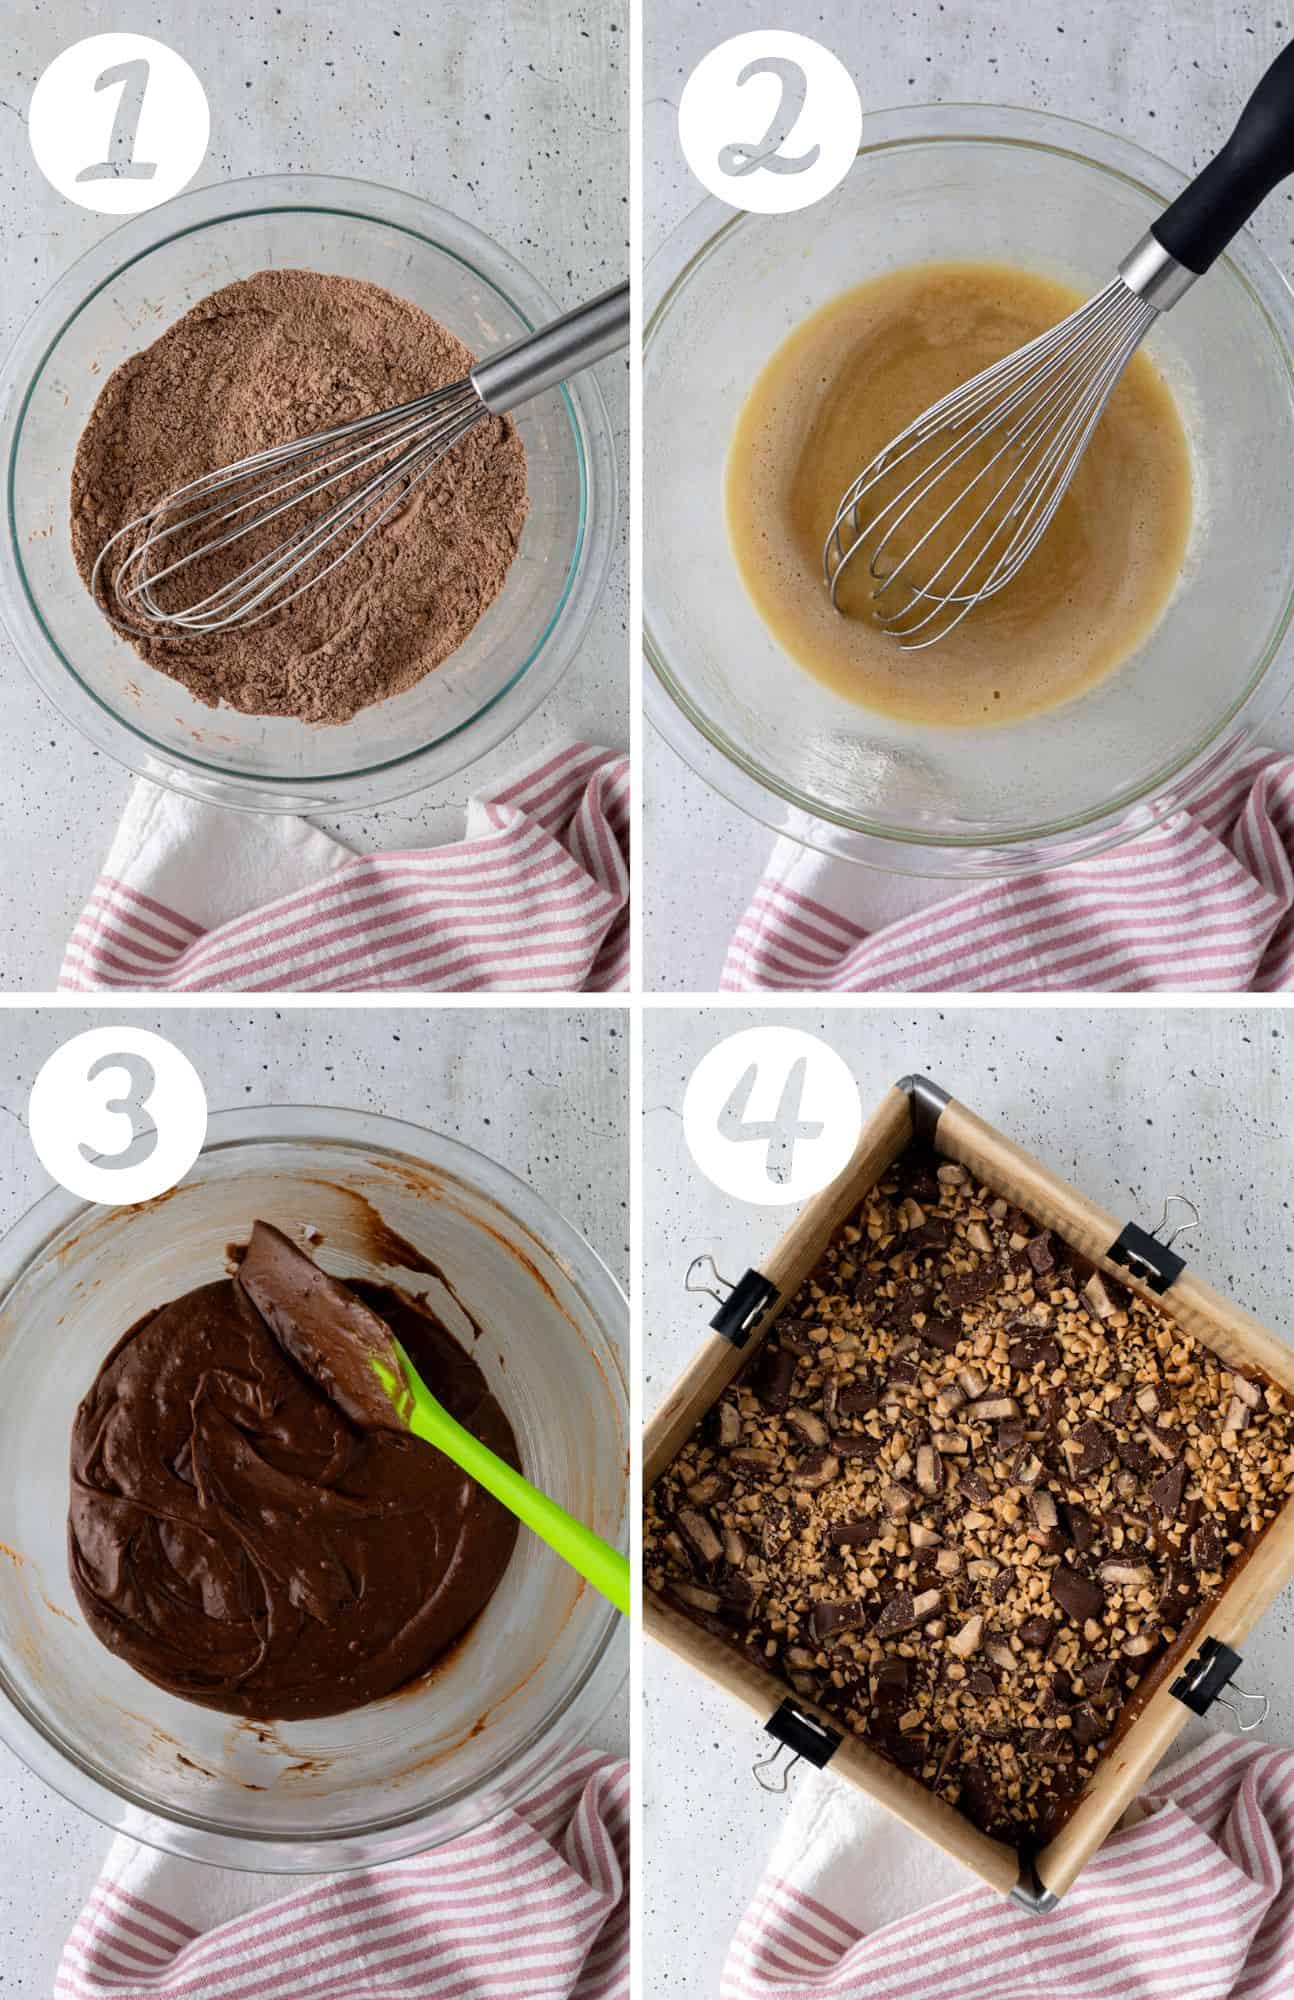 The step-by-step procedure to make brownies.